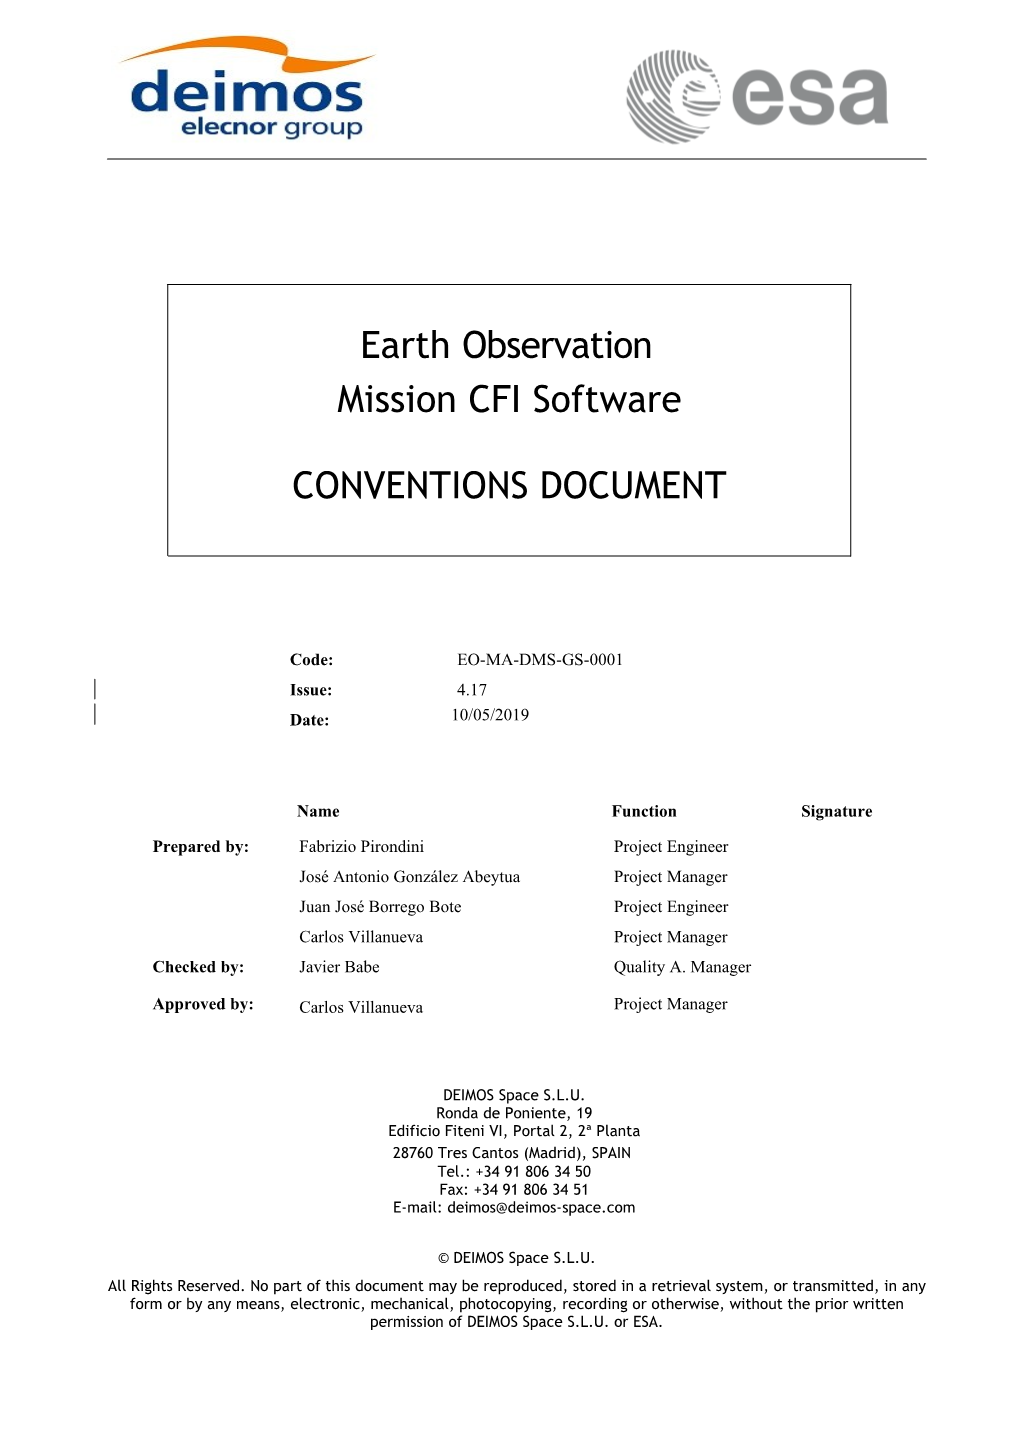 Eocfi: Mission Conventions Document